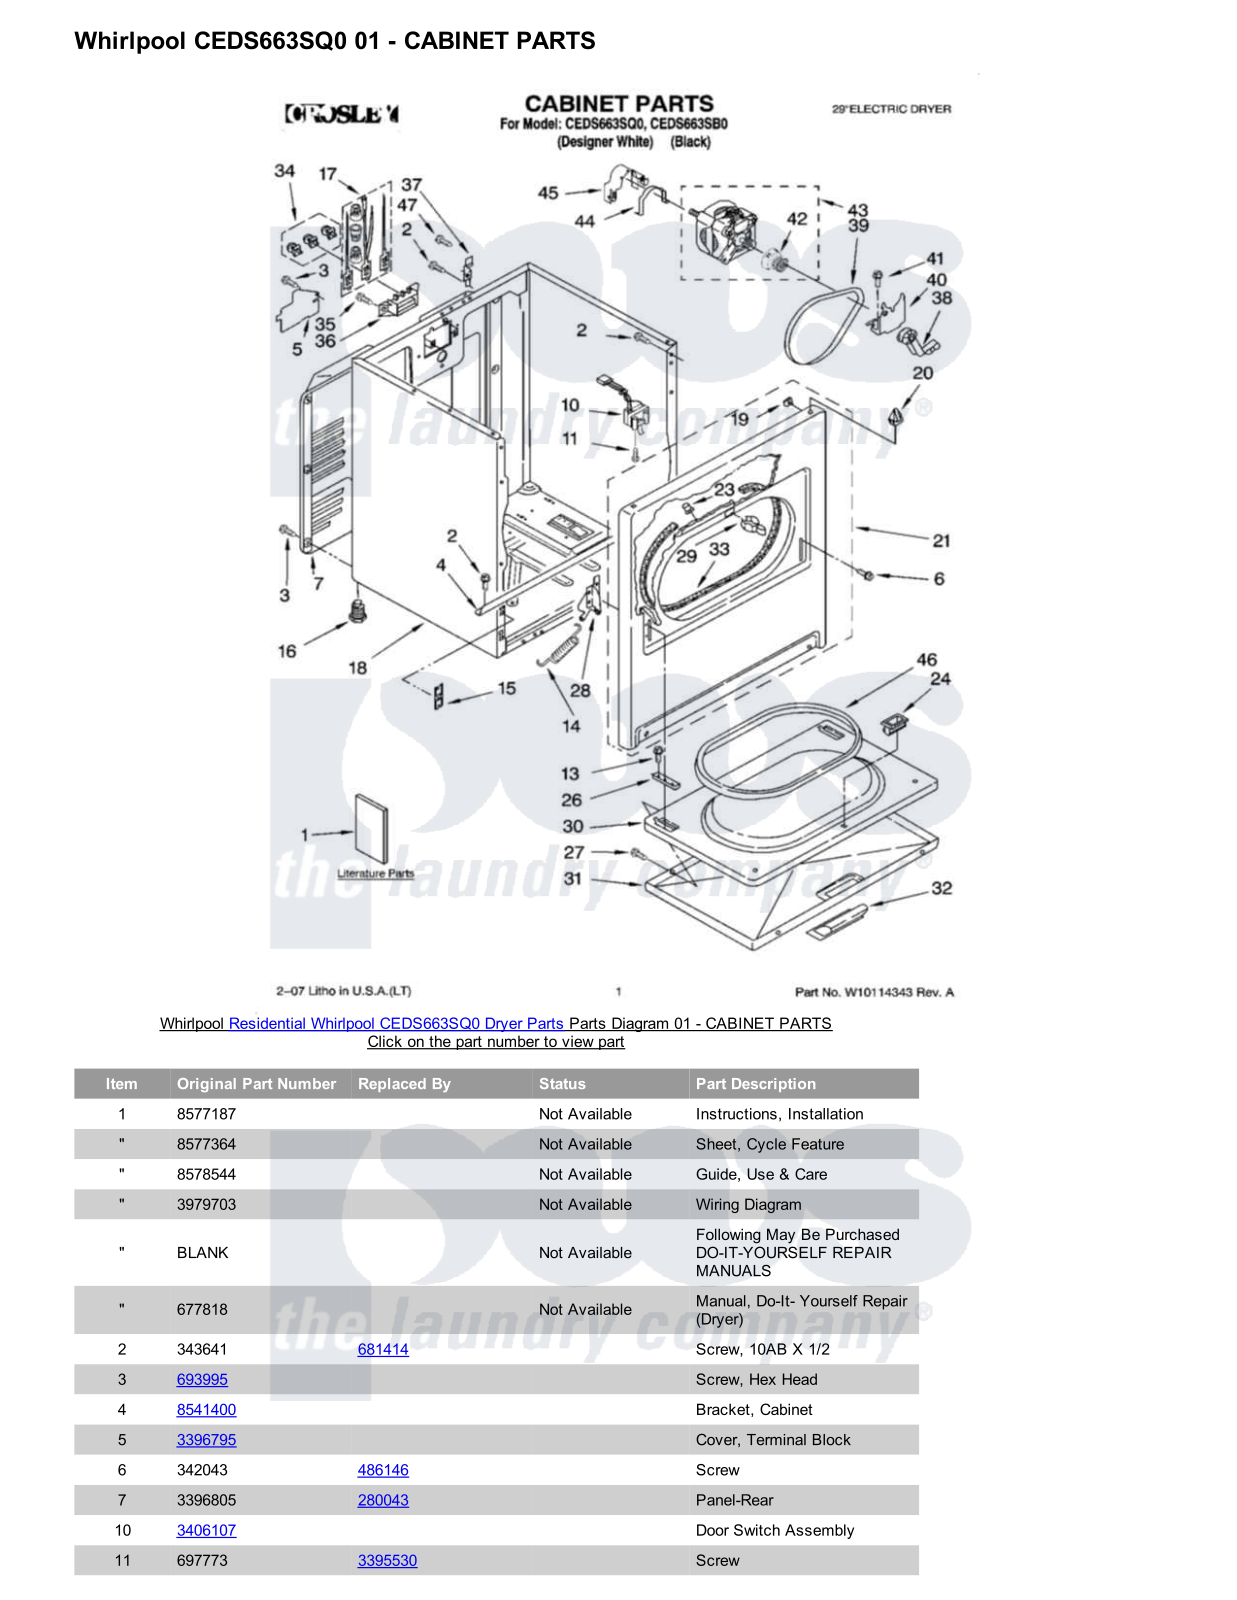 Whirlpool CEDS663SQ0 Parts Diagram